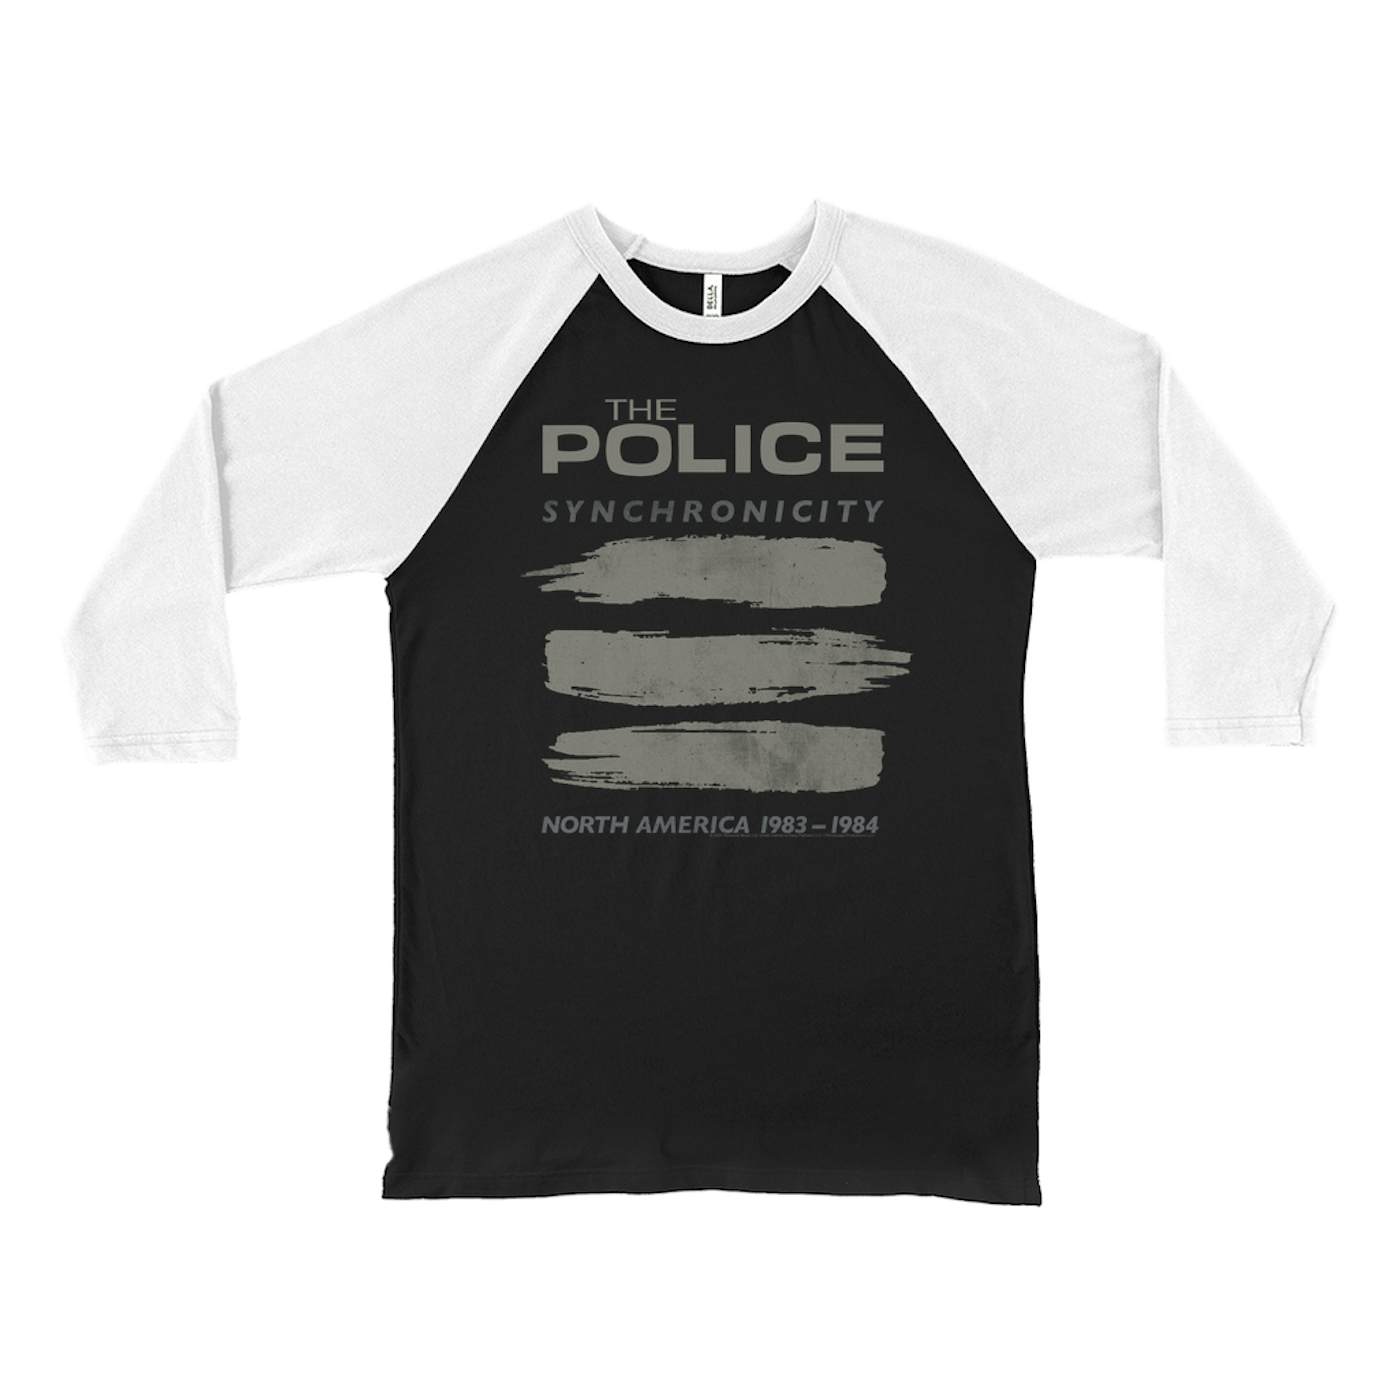 The Police 3/4 Sleeve Baseball Tee | Synchronicity North America Tour 1983 - 1984 The Police Shirt